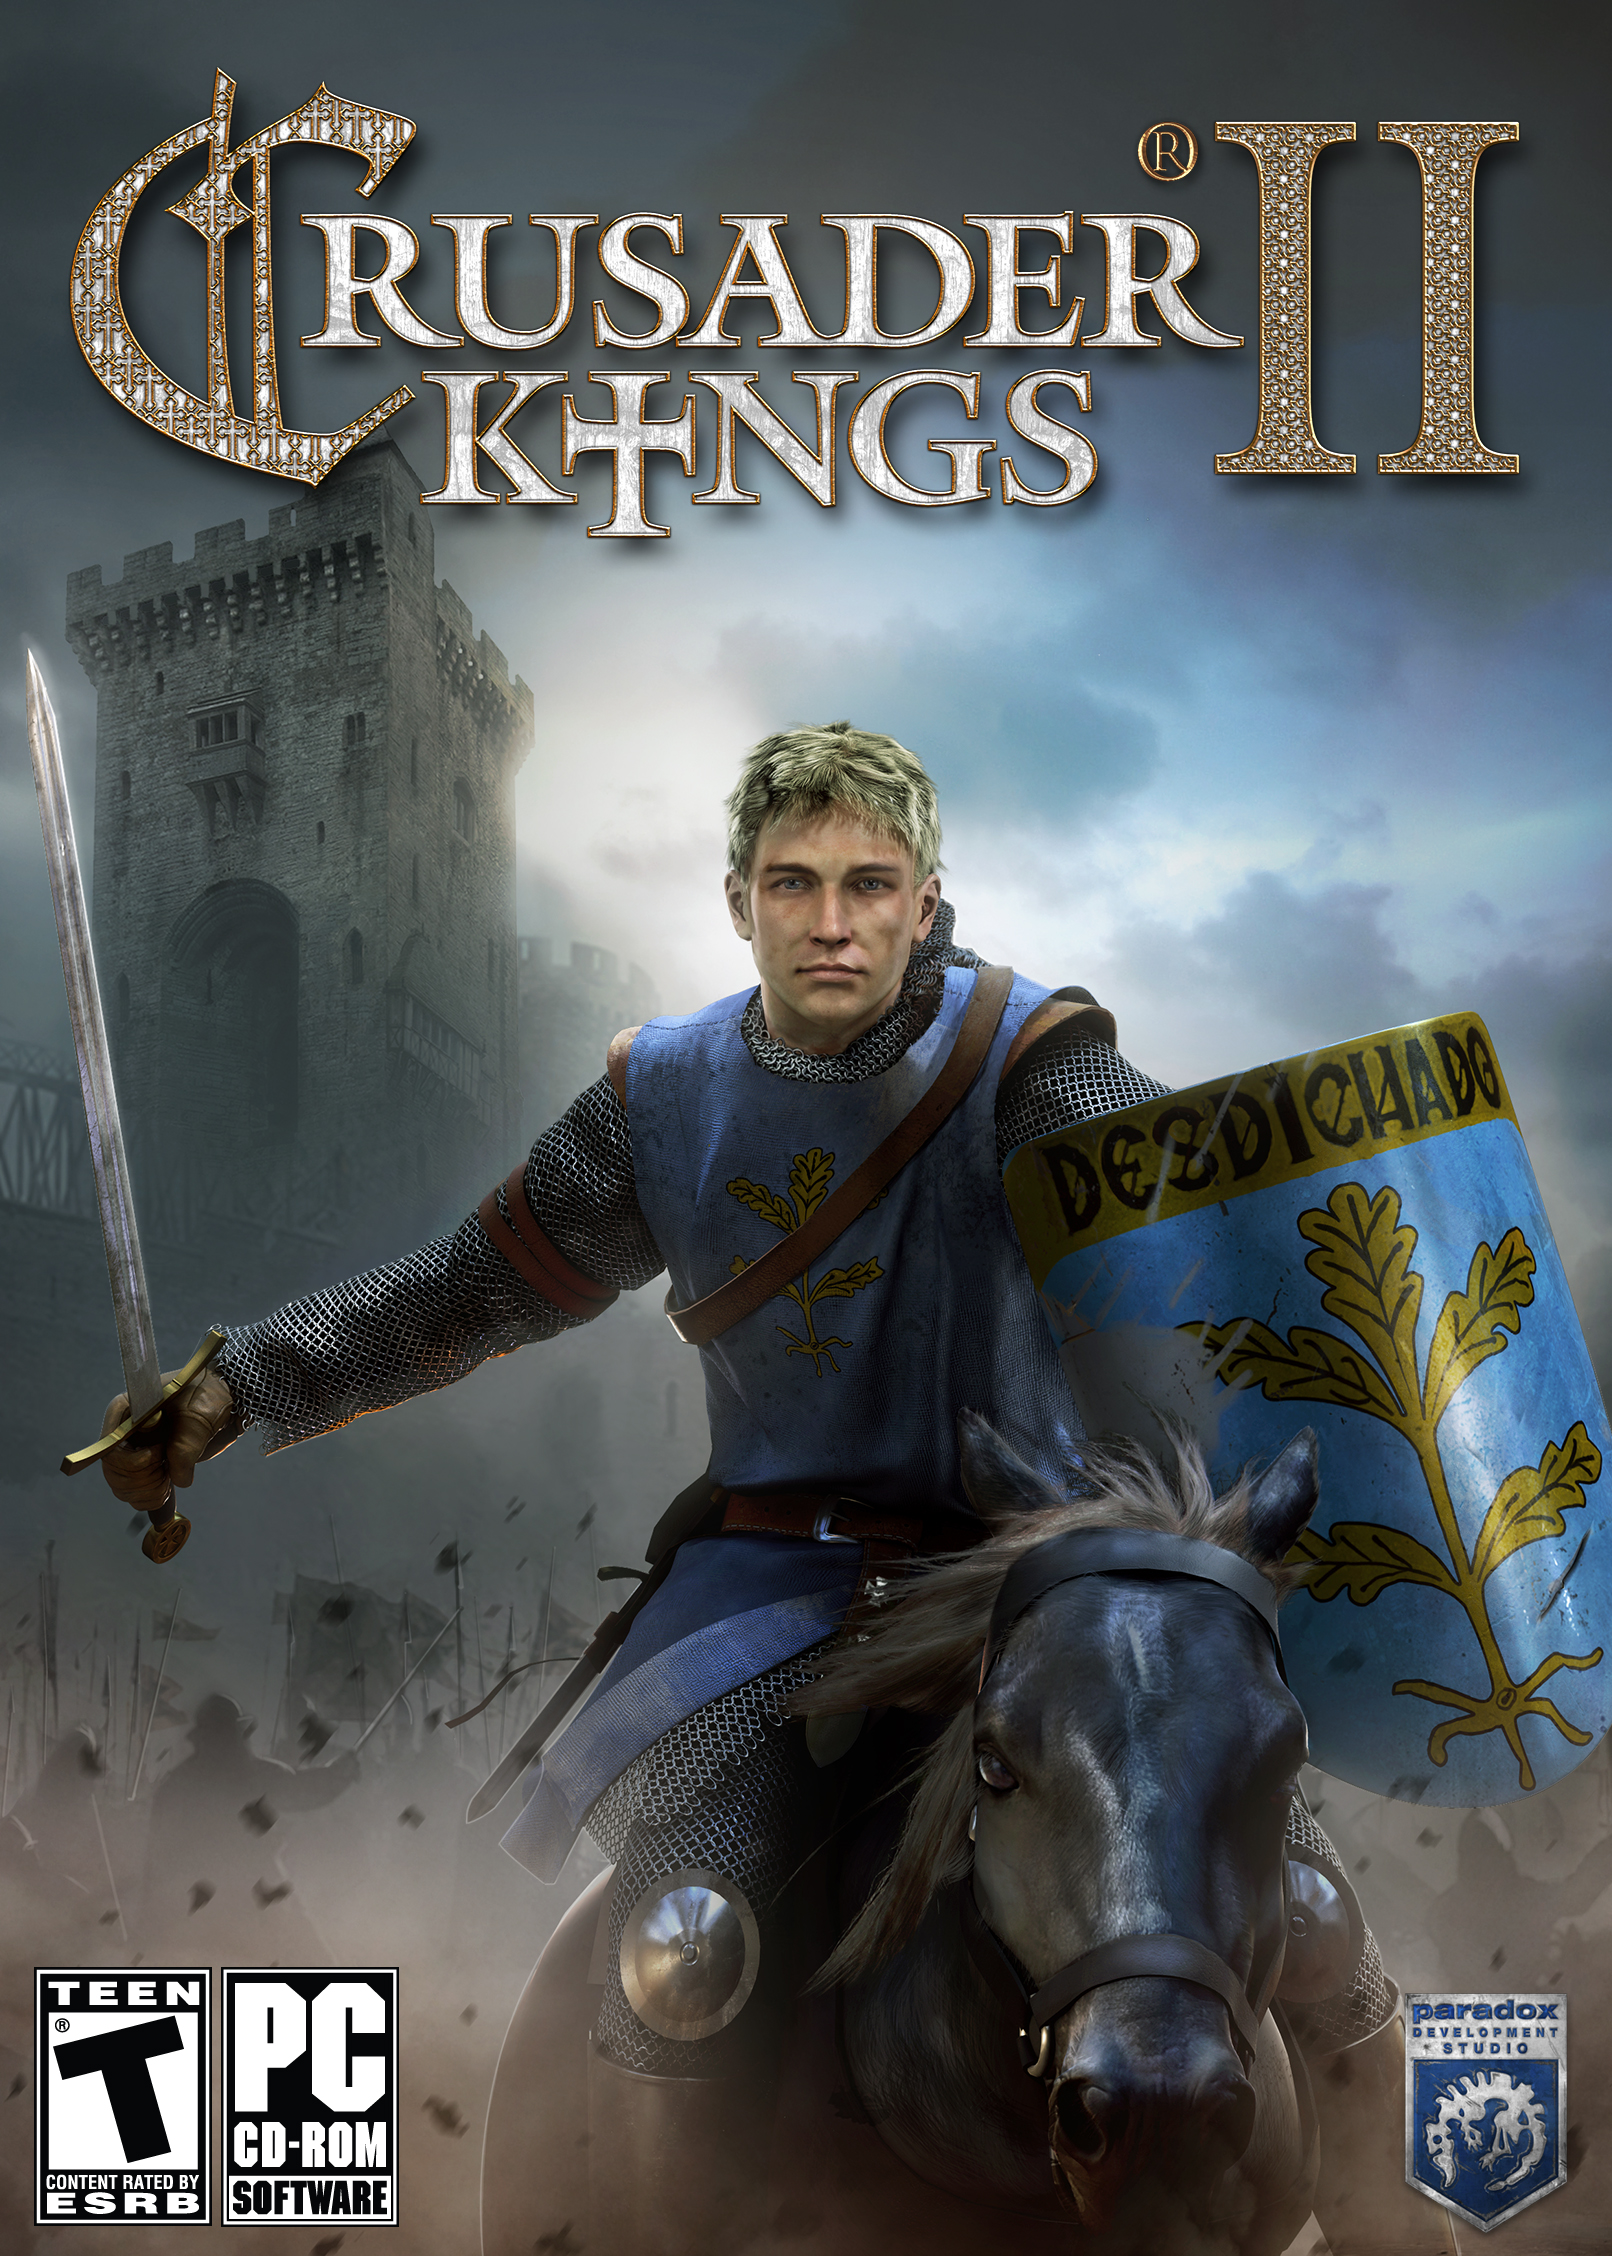 Crusader kings 2 game